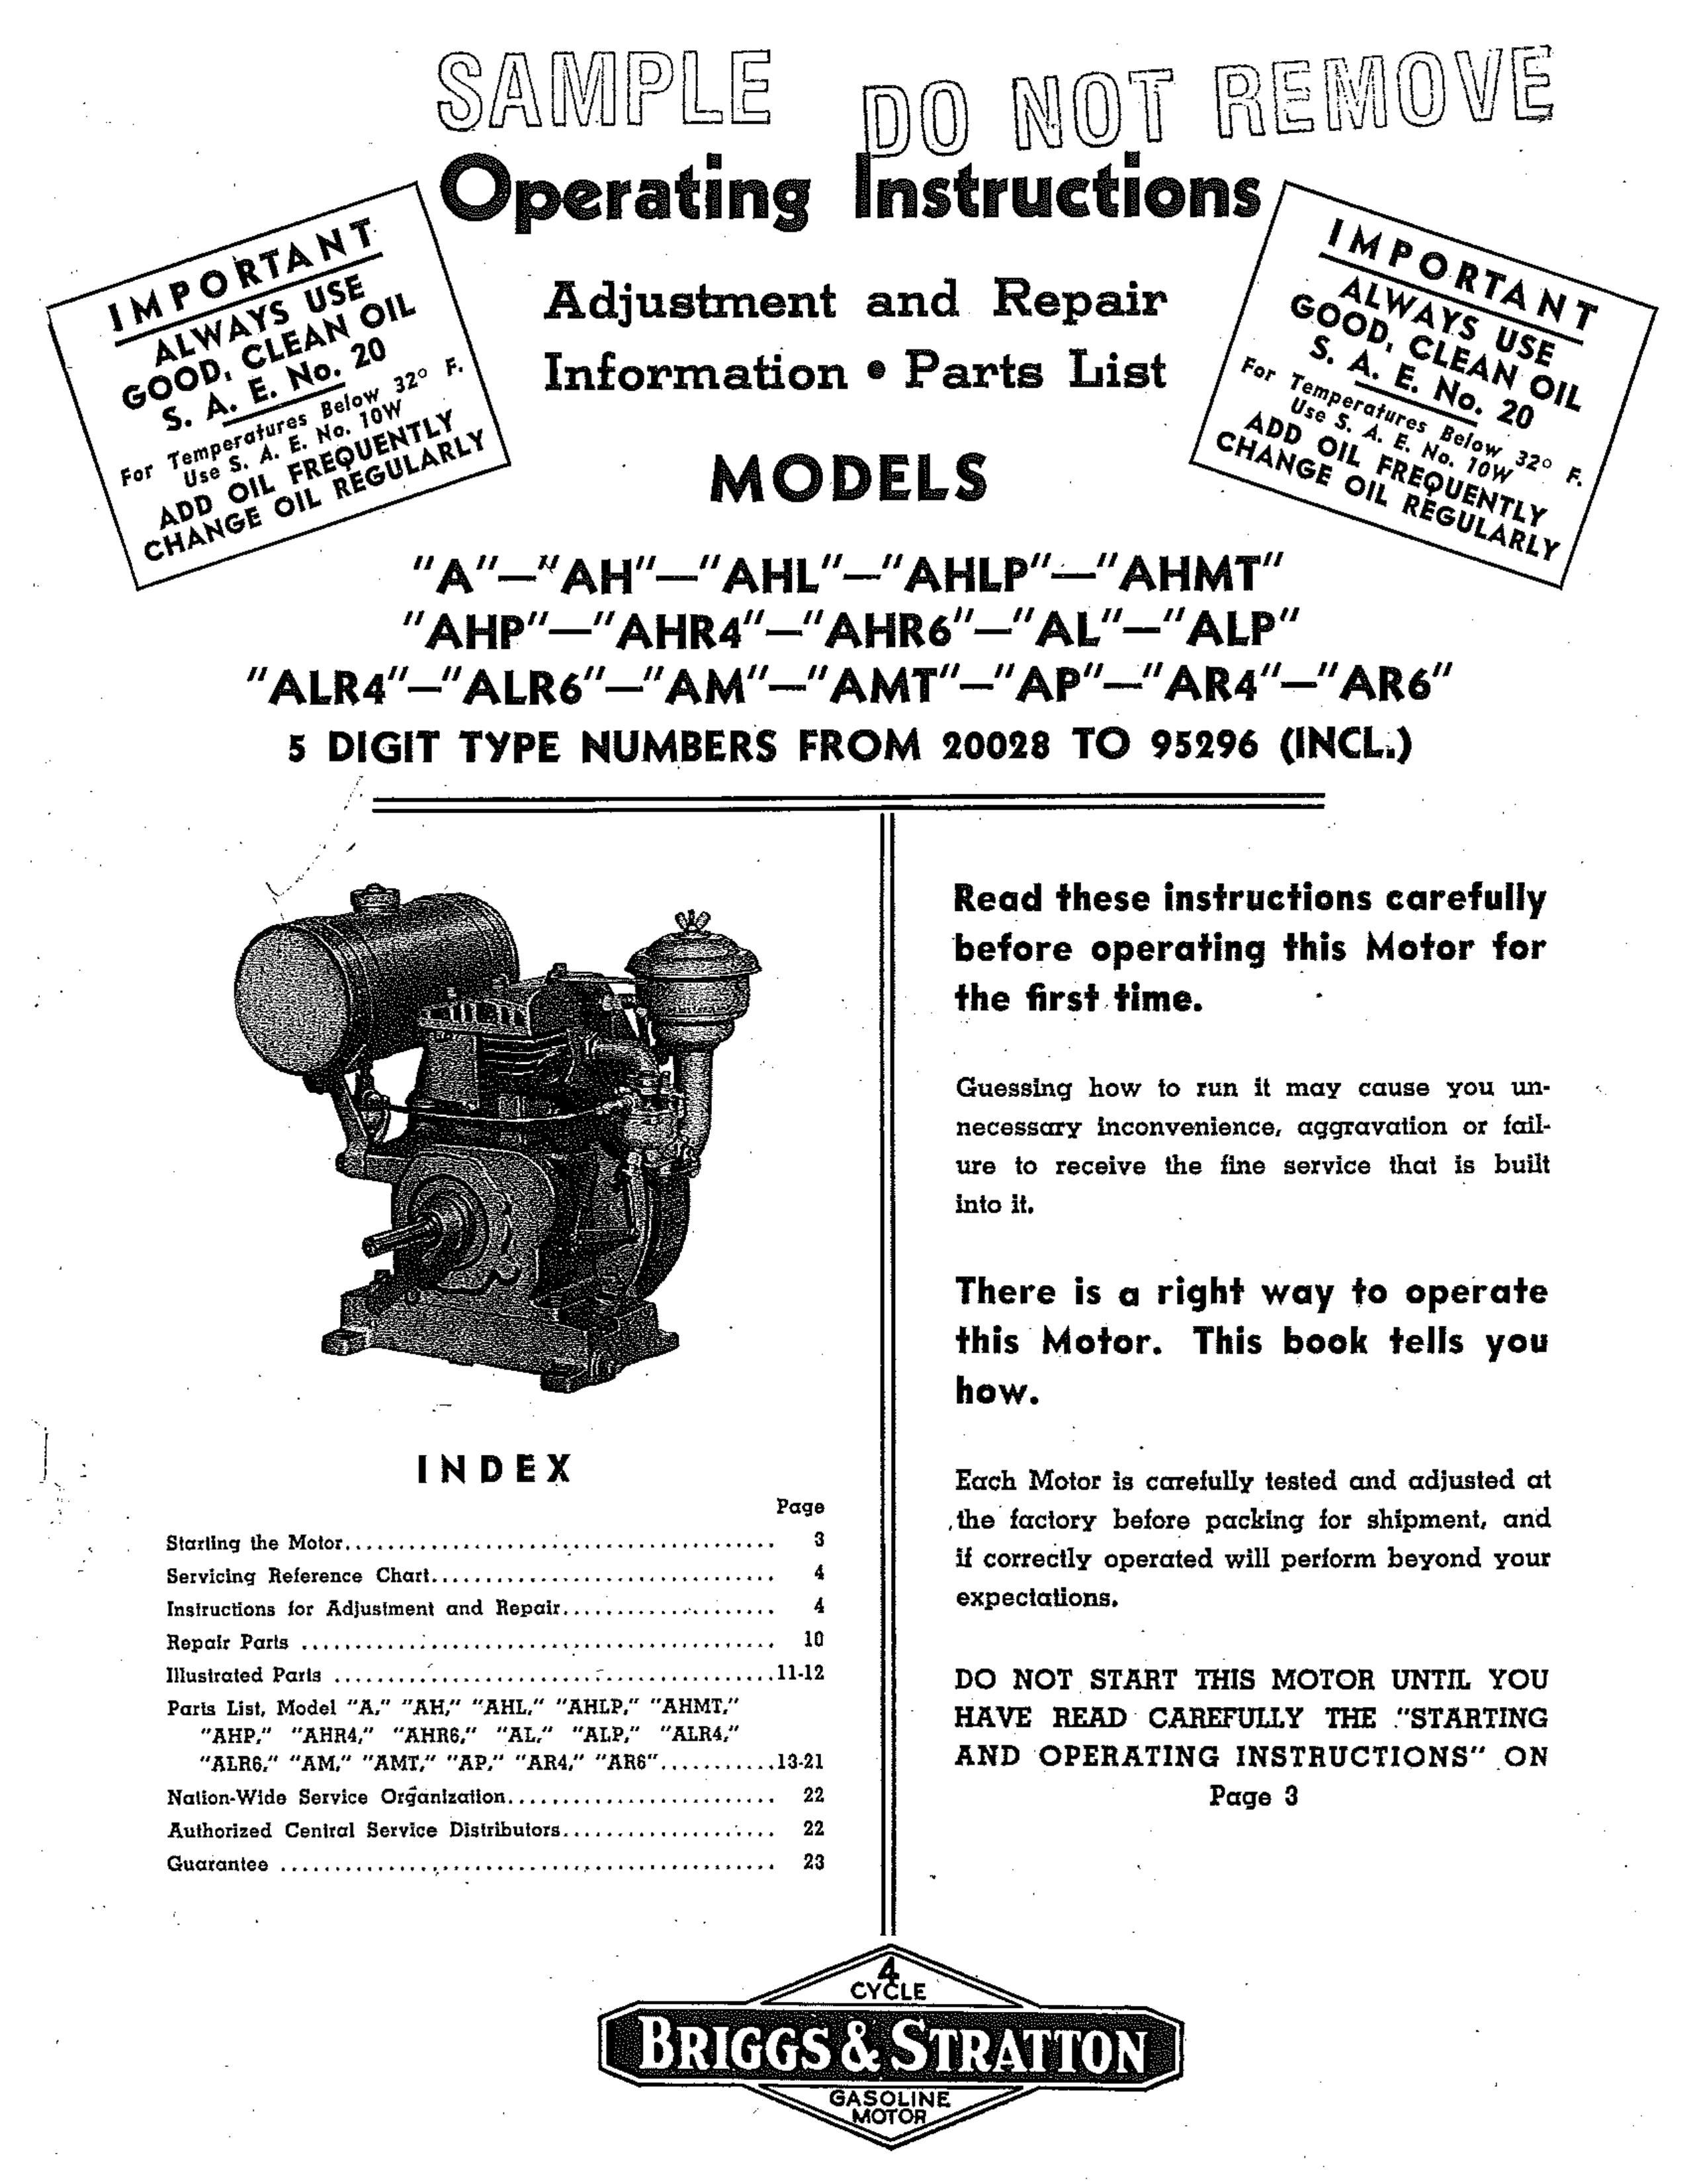 Briggs & Stratton AHR6 Outboard Motor User Manual